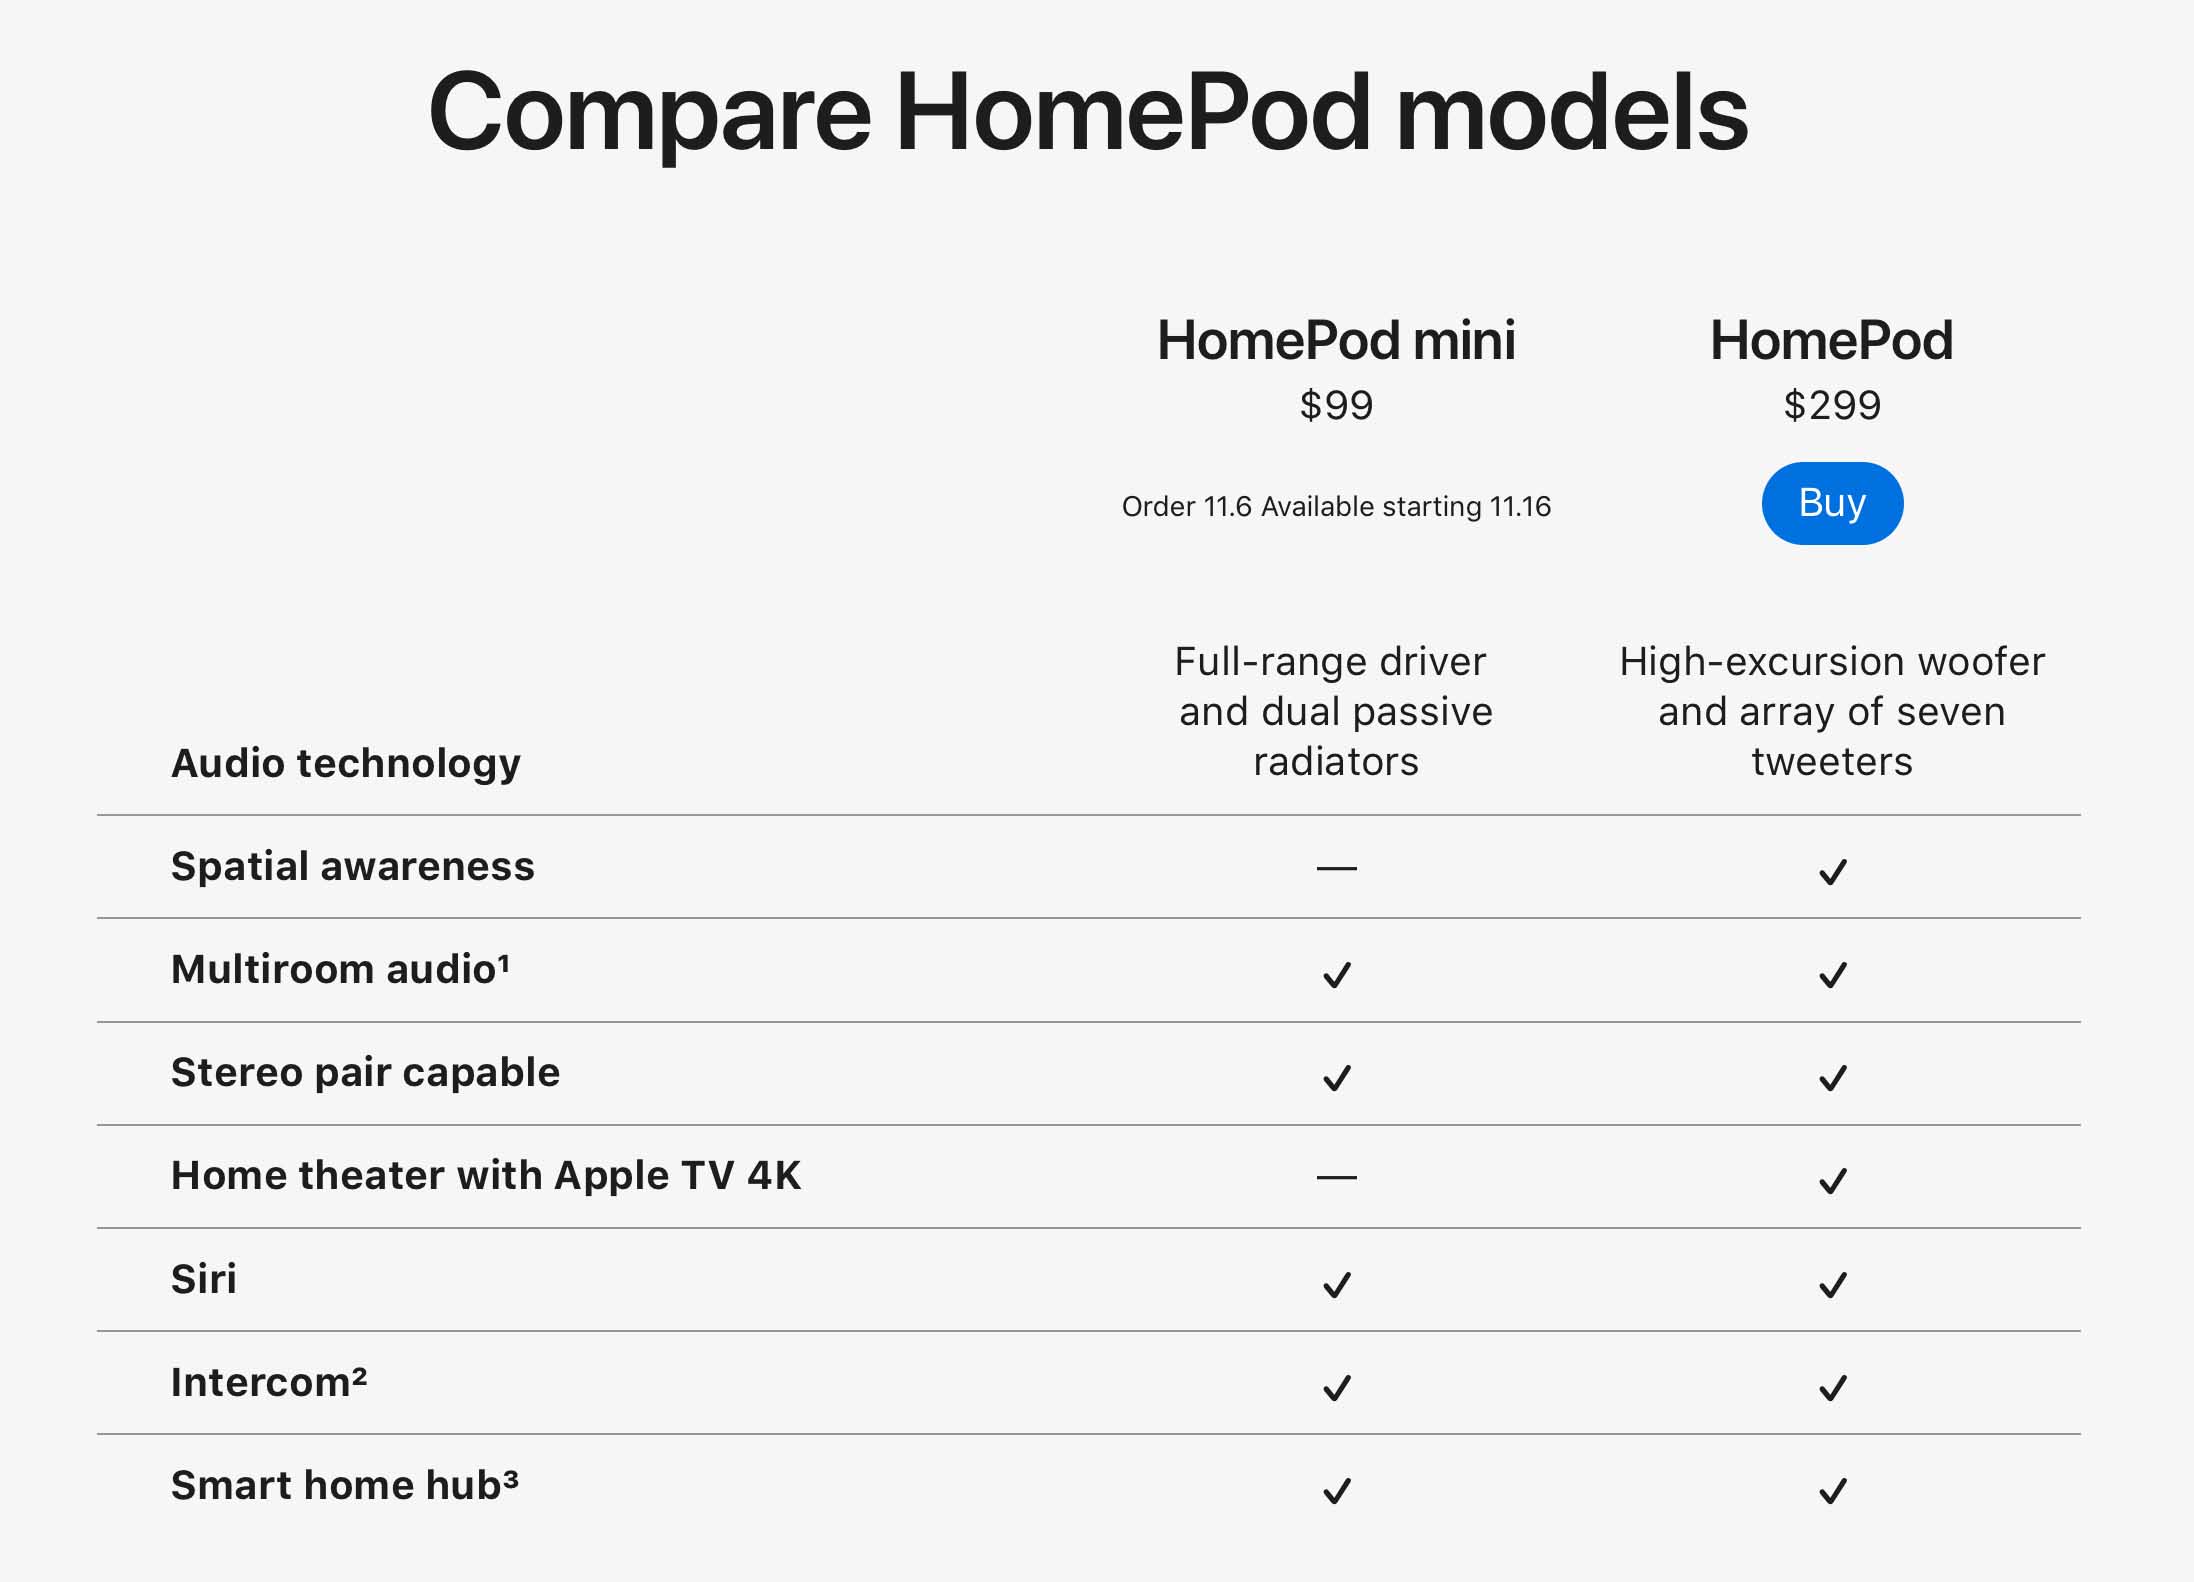 HomePod mini, niente “Home Cinema” con Apple TK 4K